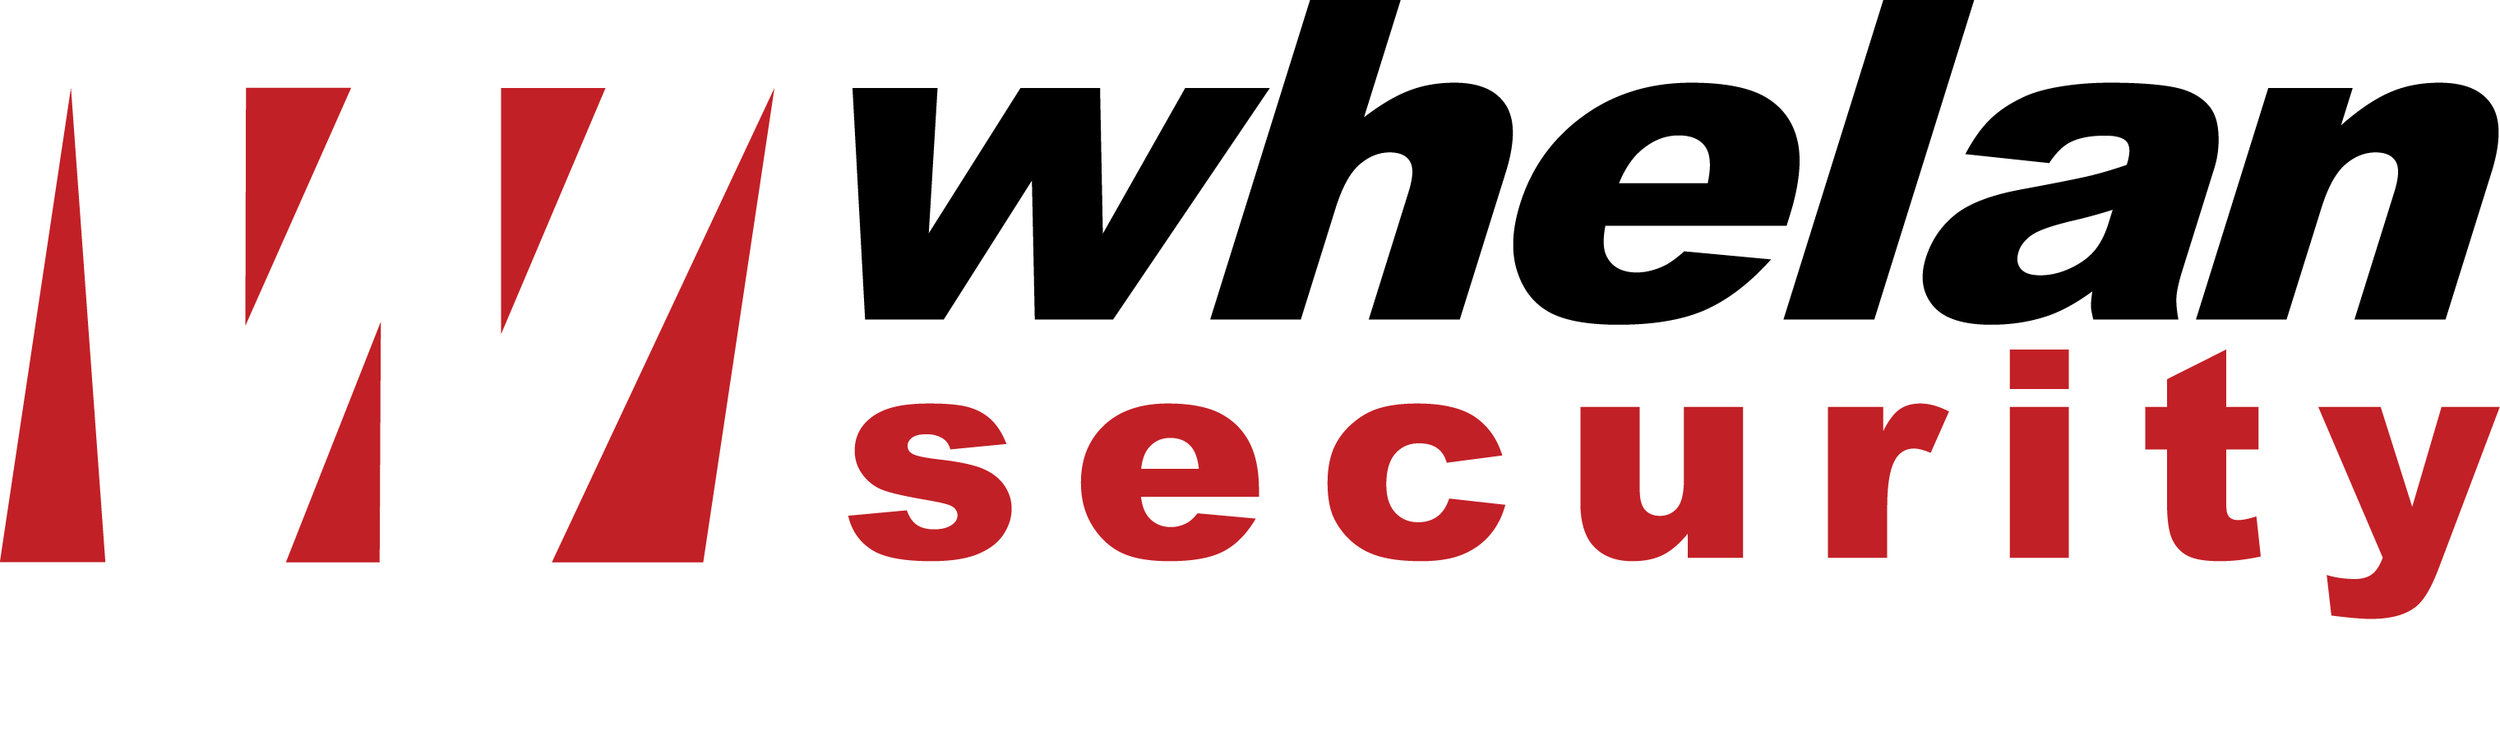 Whelan Security Standard Logo (O).jpg